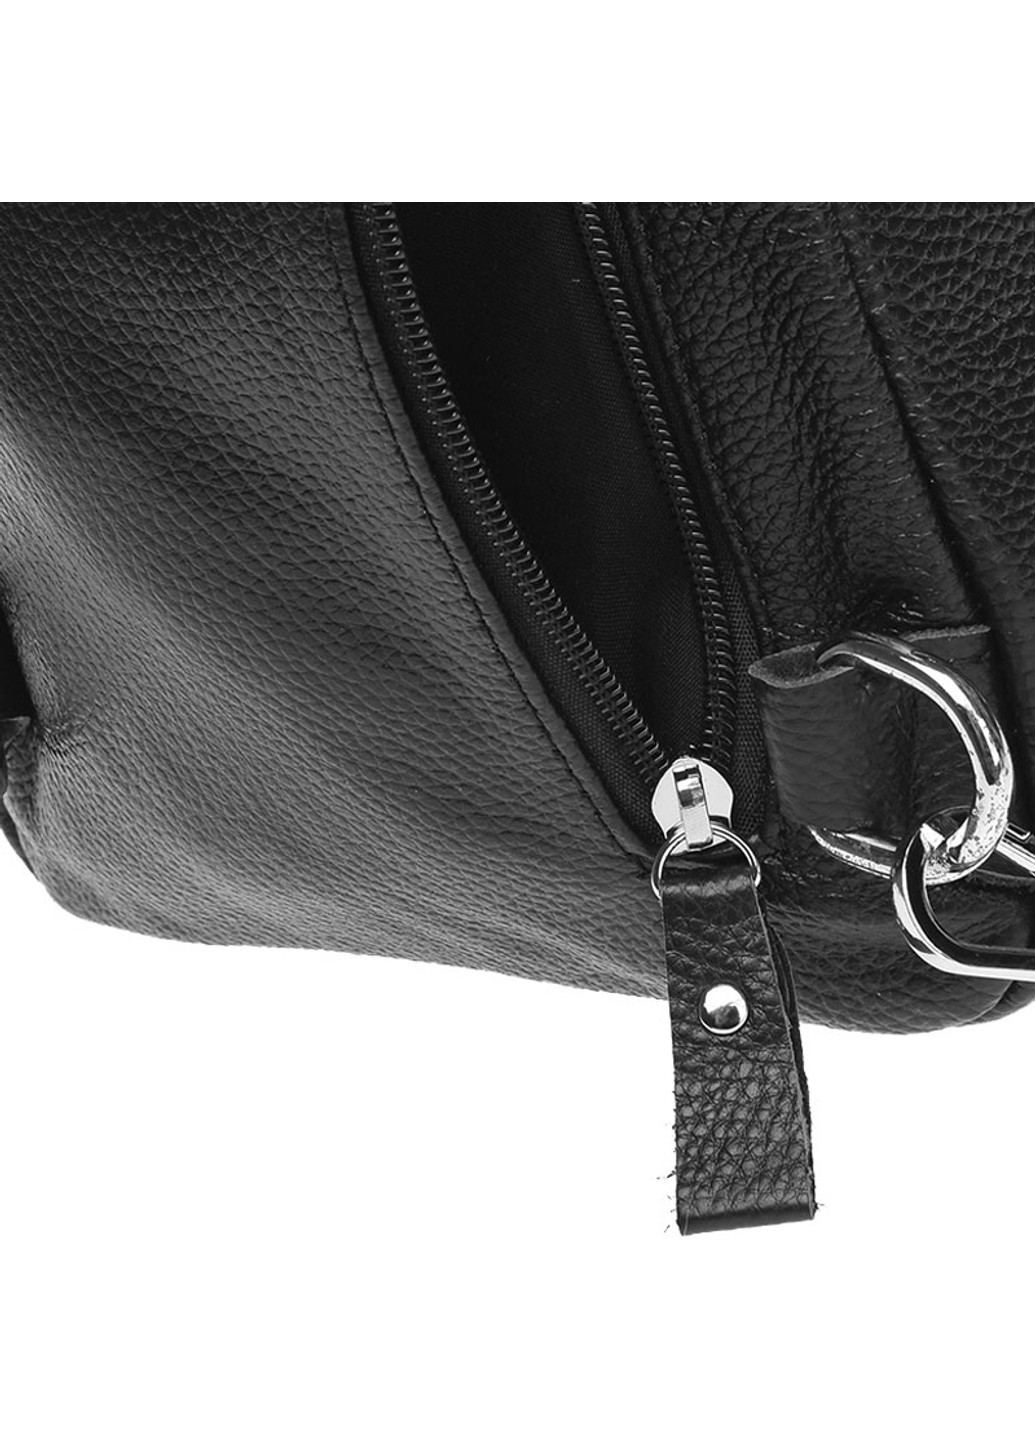 Мужской кожаный рюкзак K15060-black Borsa Leather (266143428)